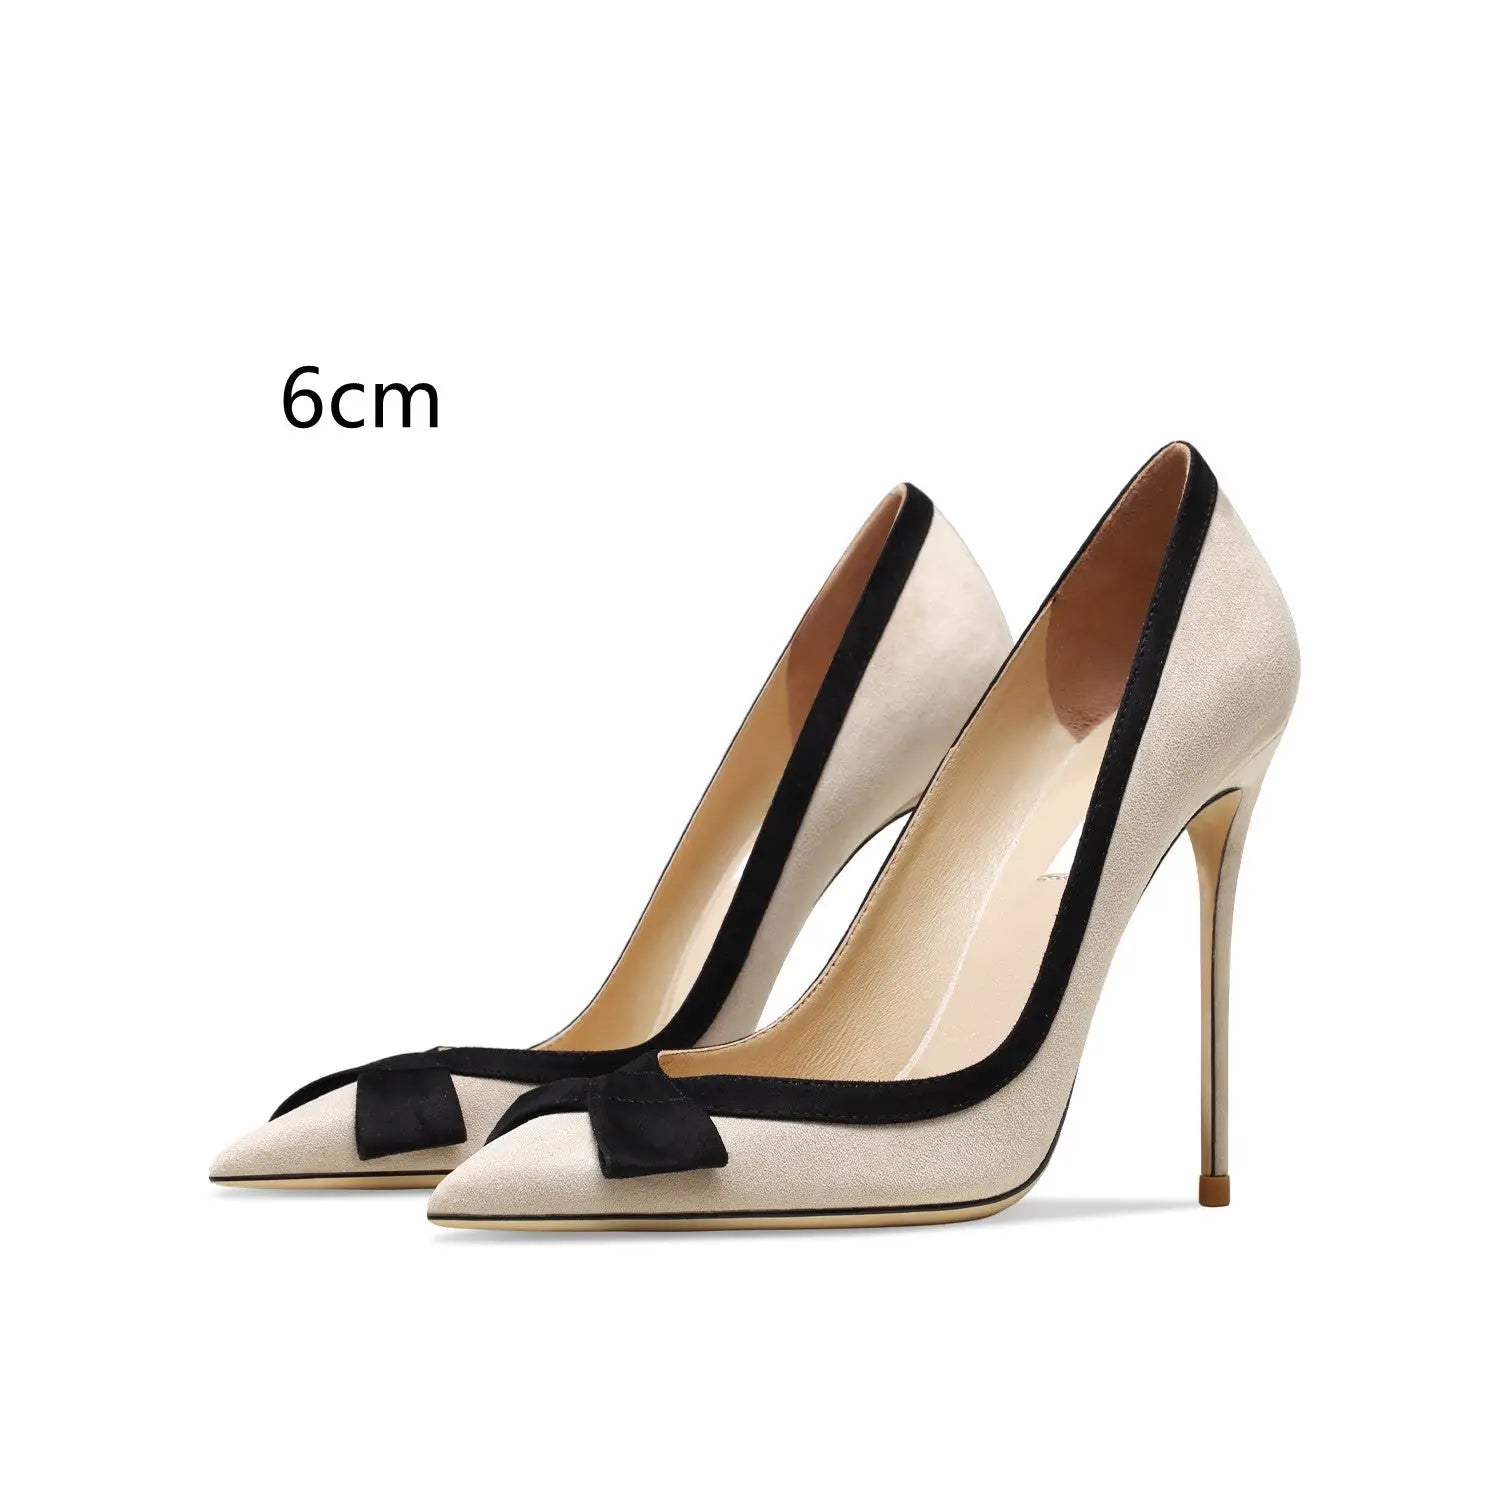 Perfect leather stiletto high heels - apricot / cashmere 6cm / 33 - pumps